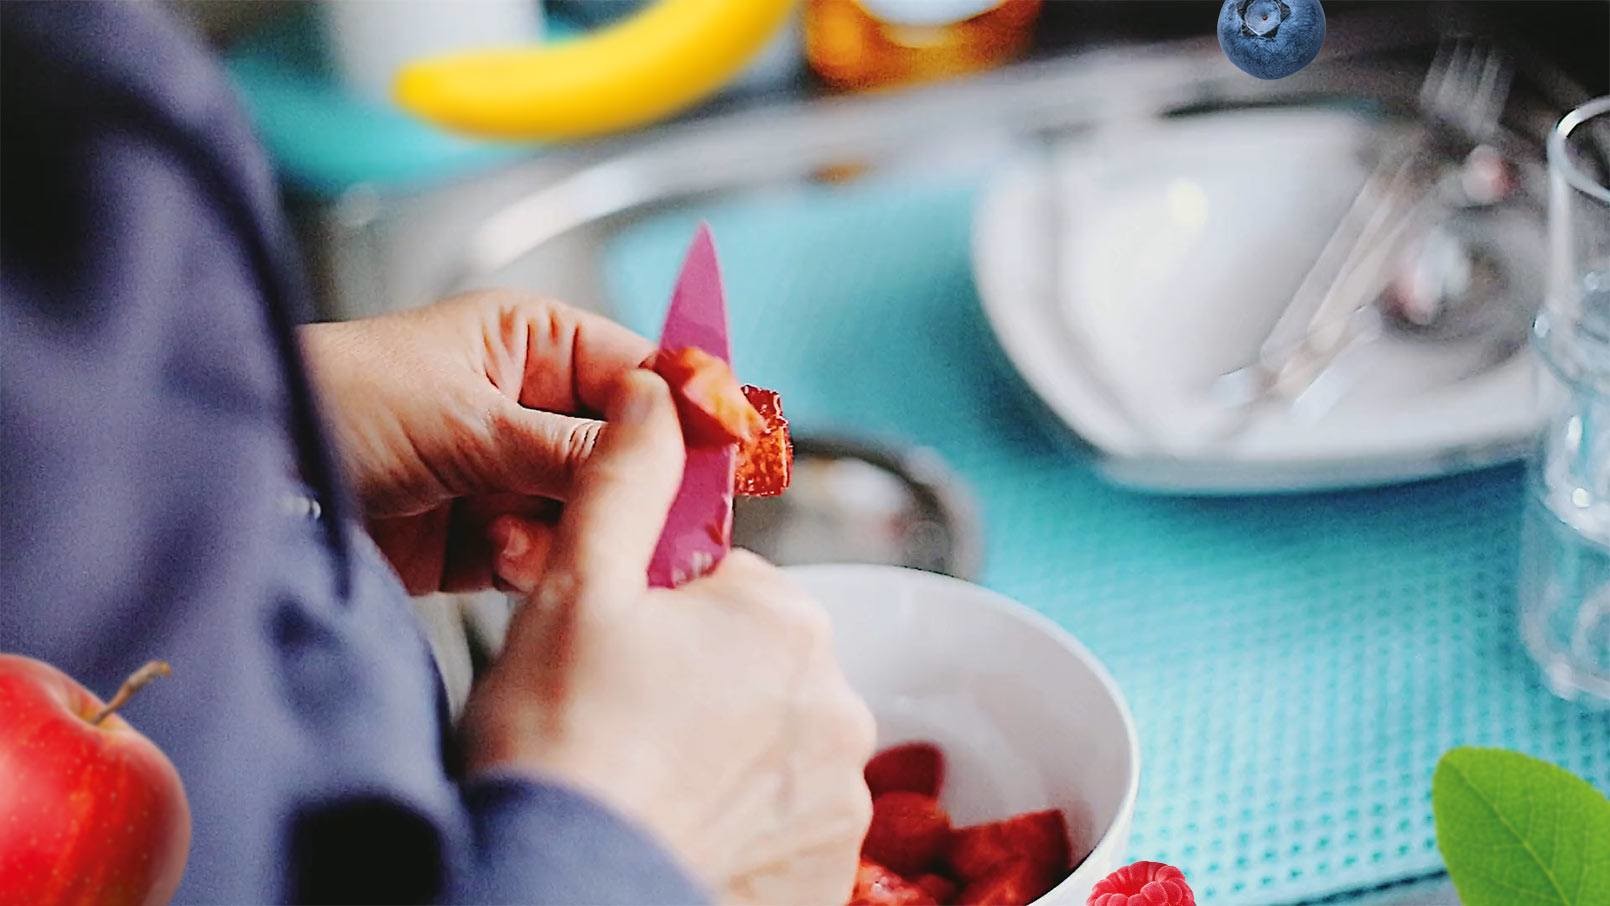 Man cutting strawberries